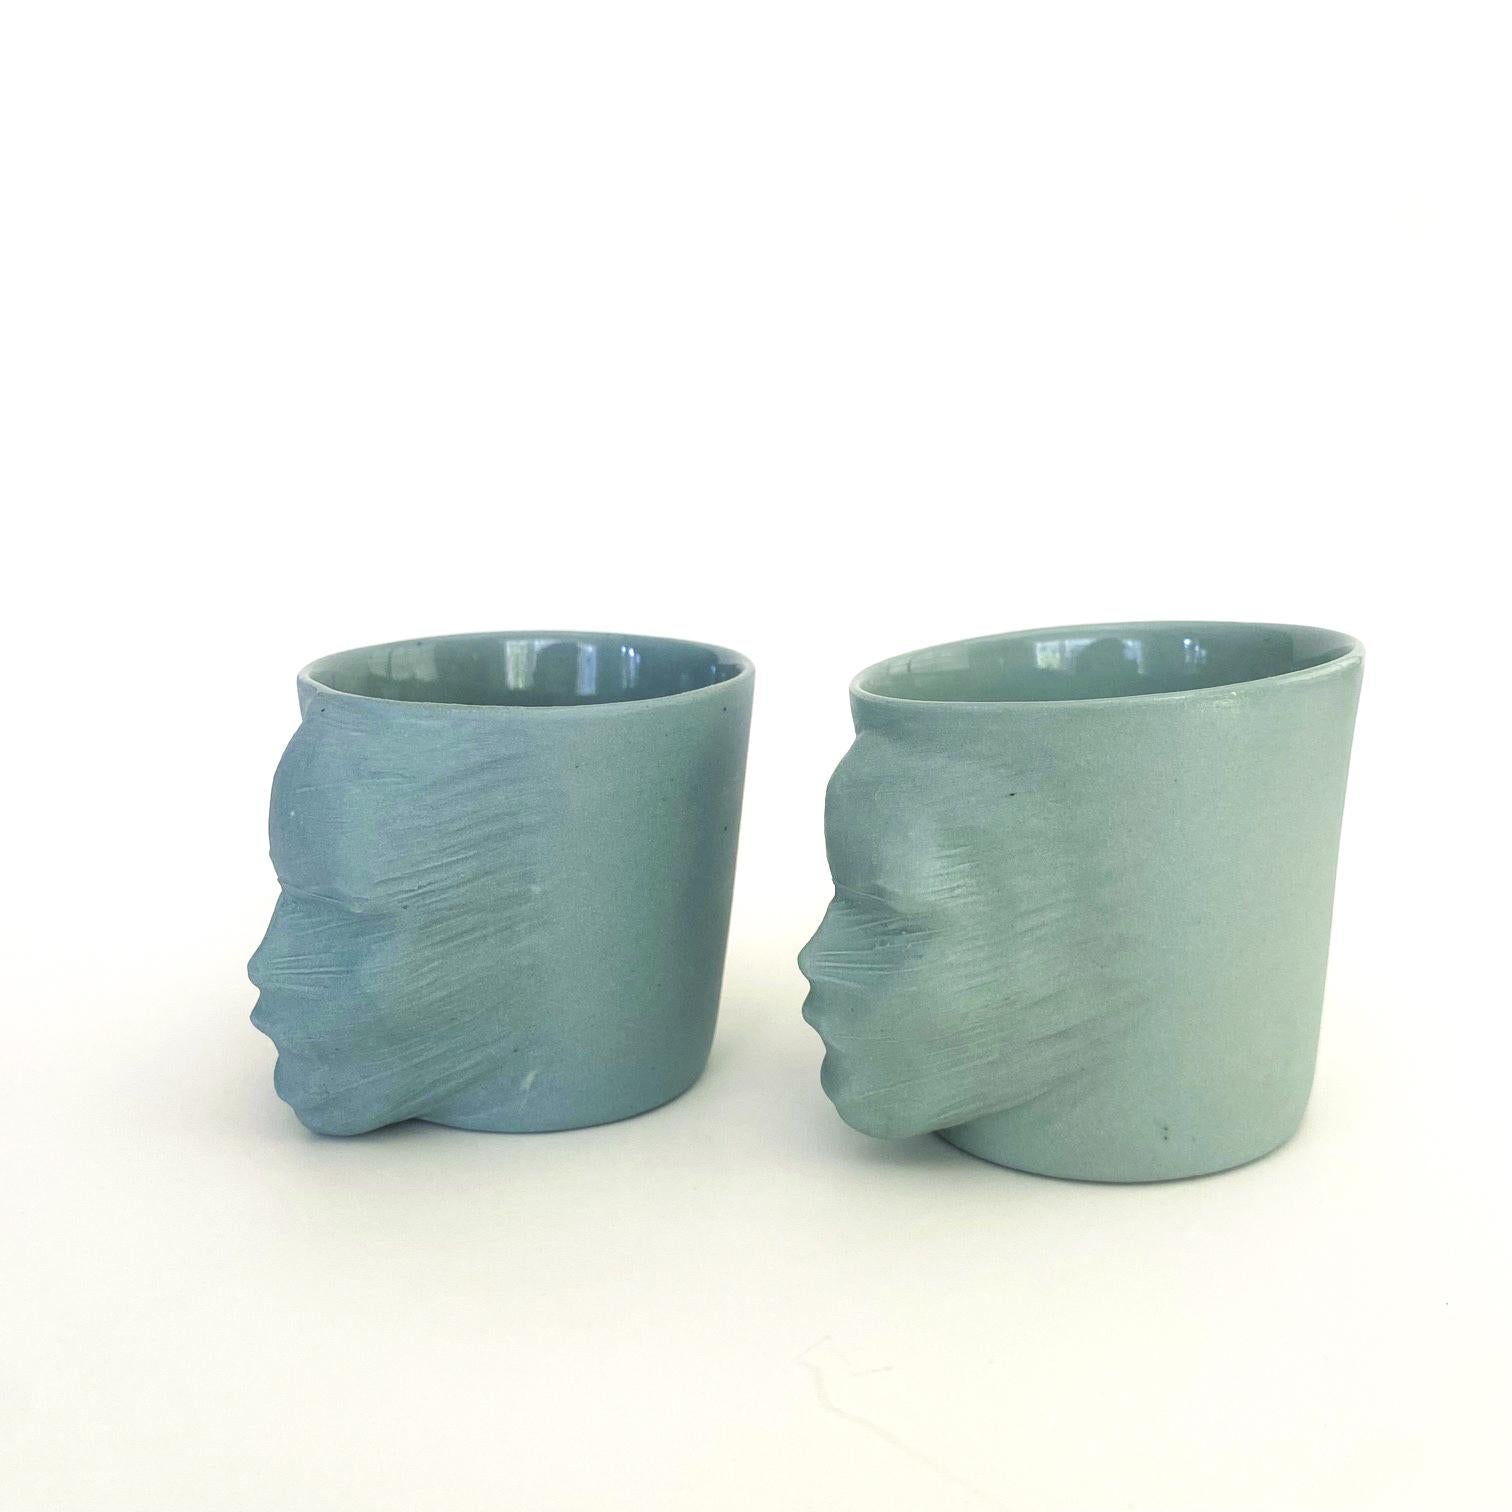 A set of 2 sculptural porcelain cups handmade by the ceramic artist Hulya Sozer. 
Food safe glaze.
Dishwasher safe.

Height: 6cm / Depth: 8cm / Diameter: 6cm
Volume: 100ml
Set includes 2 porcelain cups of 100ml

* Colors may slightly vary due to